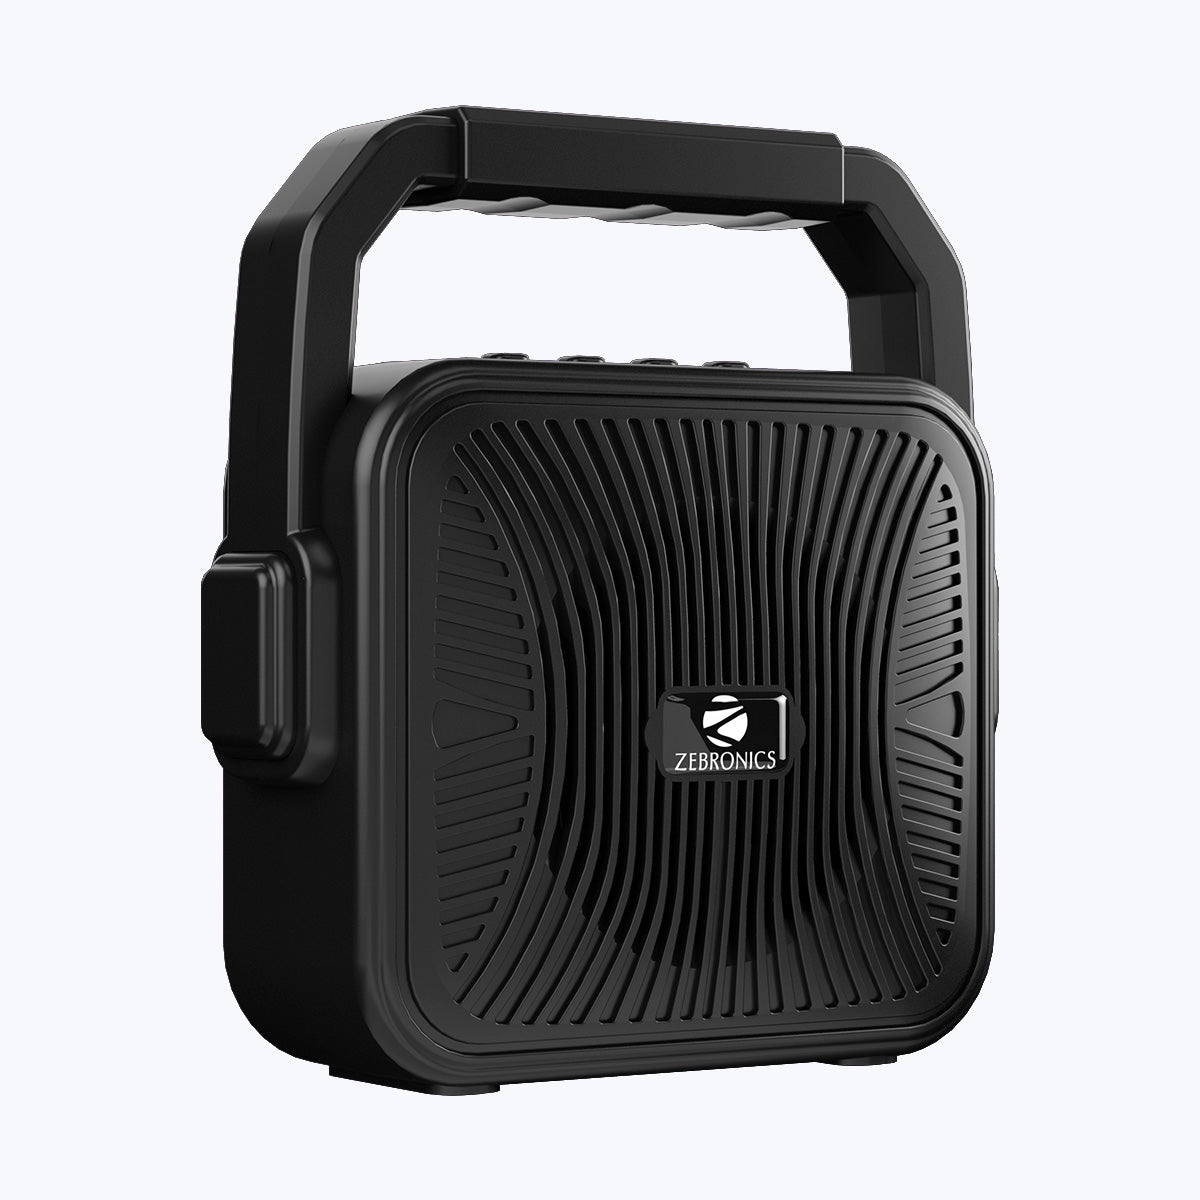  Zeb-County 2 - Wireless Portable Speaker - Zebronics